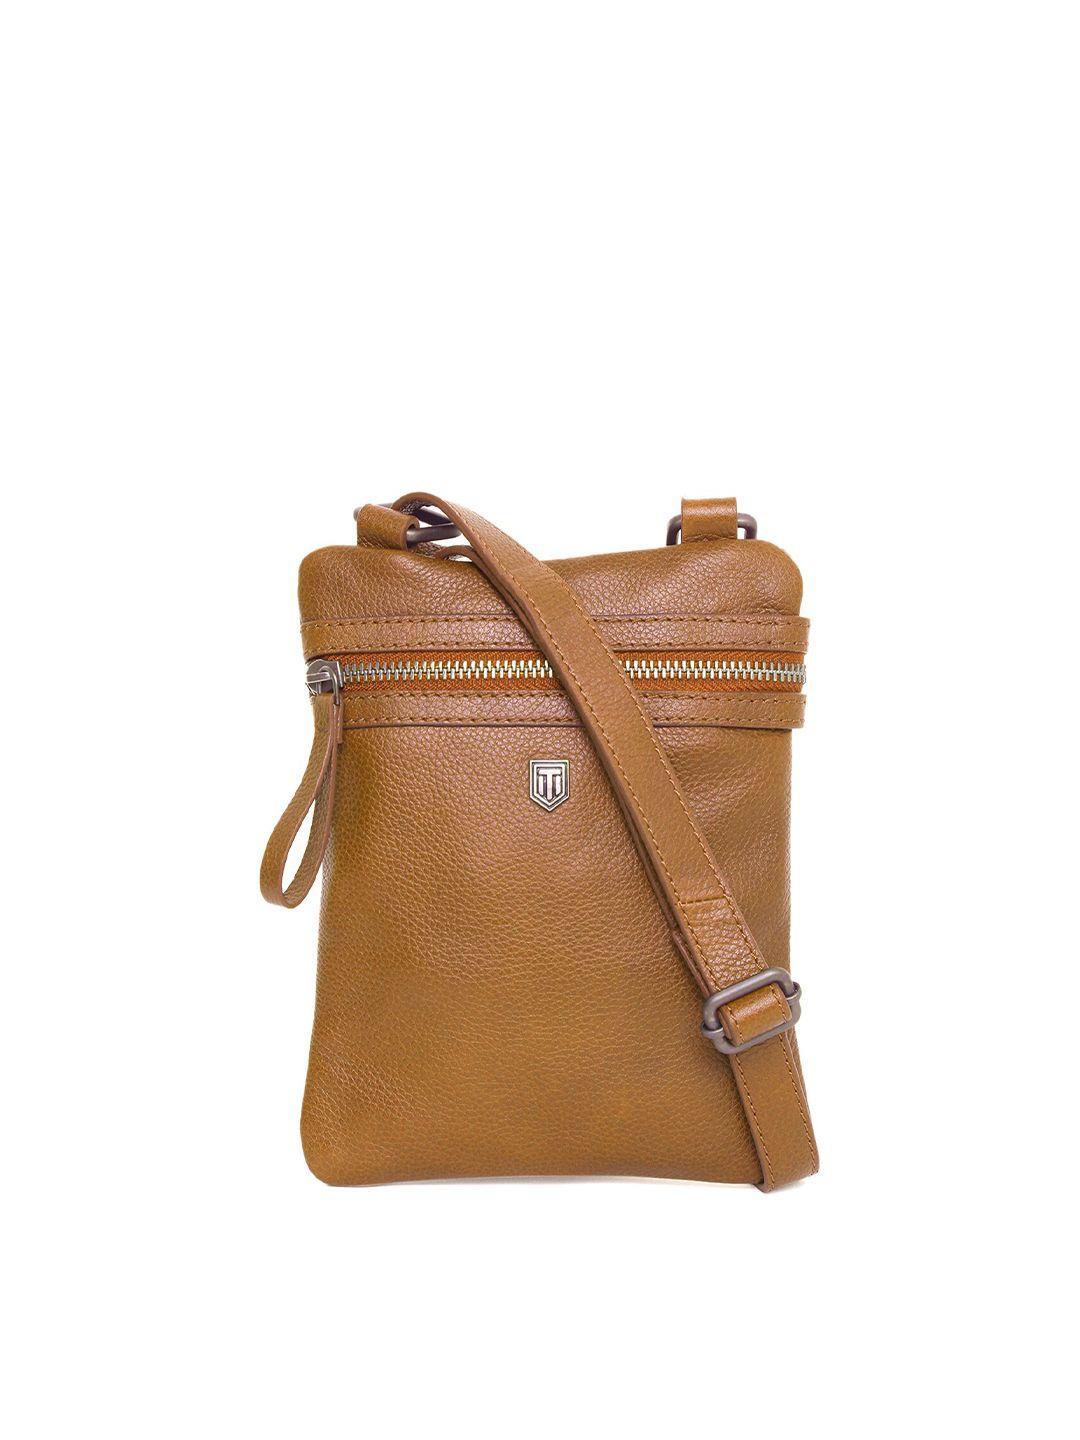 tom lang london tan solid crossbody leather messenger bag